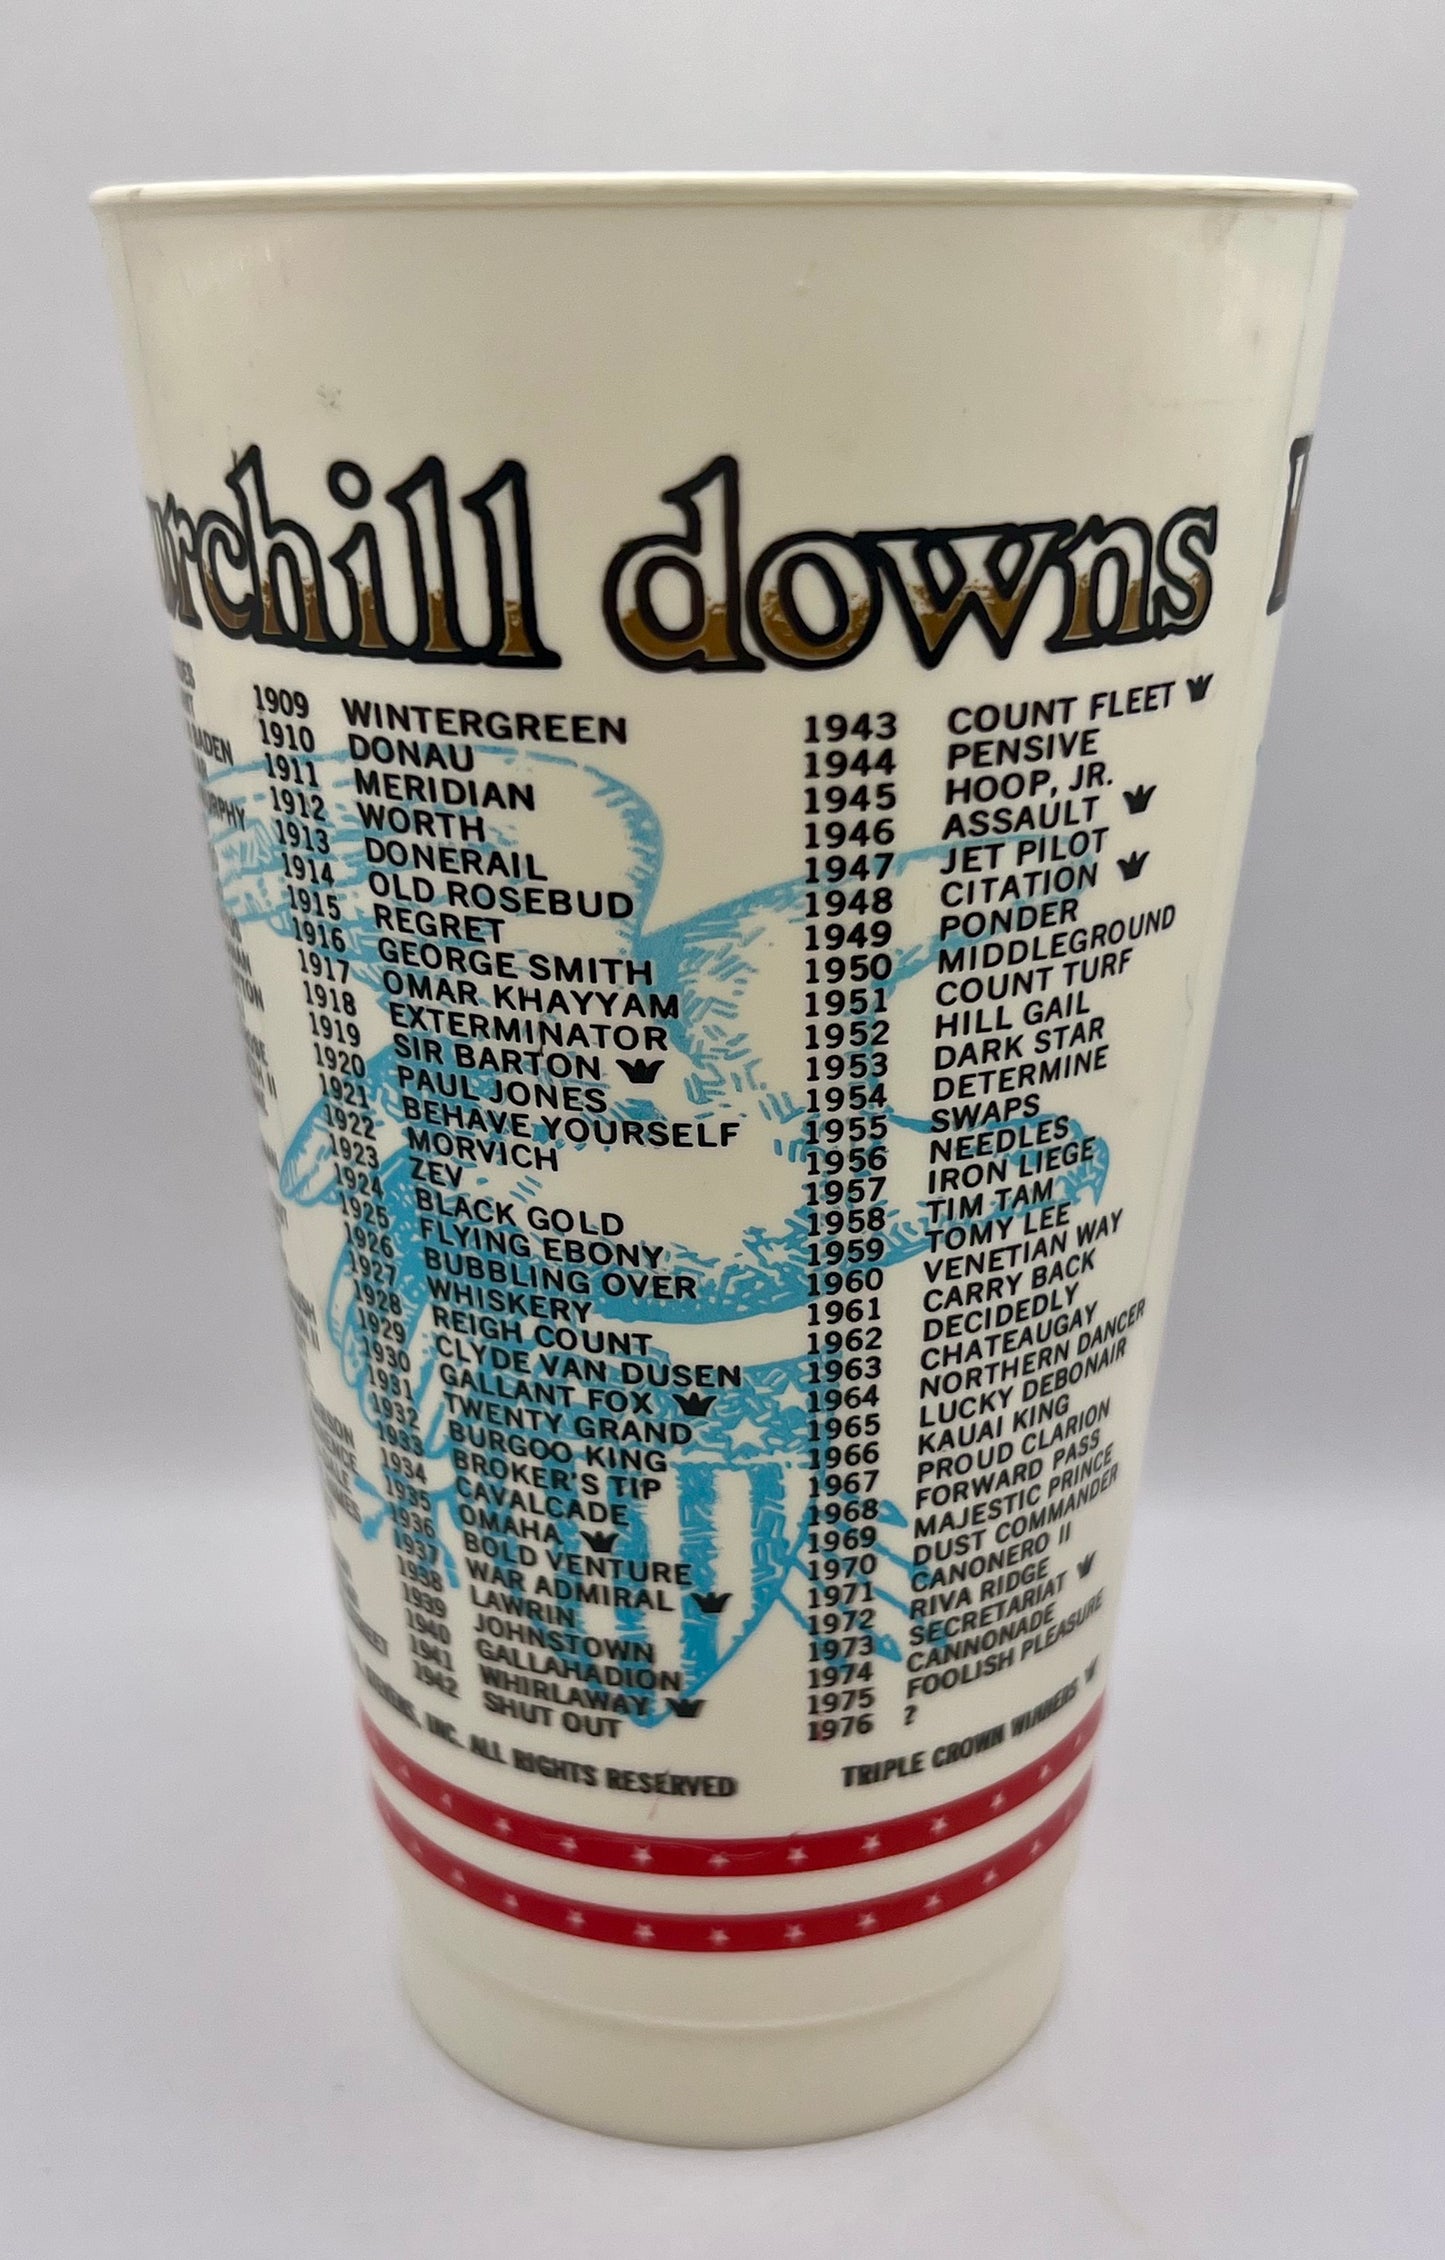 1976 Kentucky Derby Plastic Cup